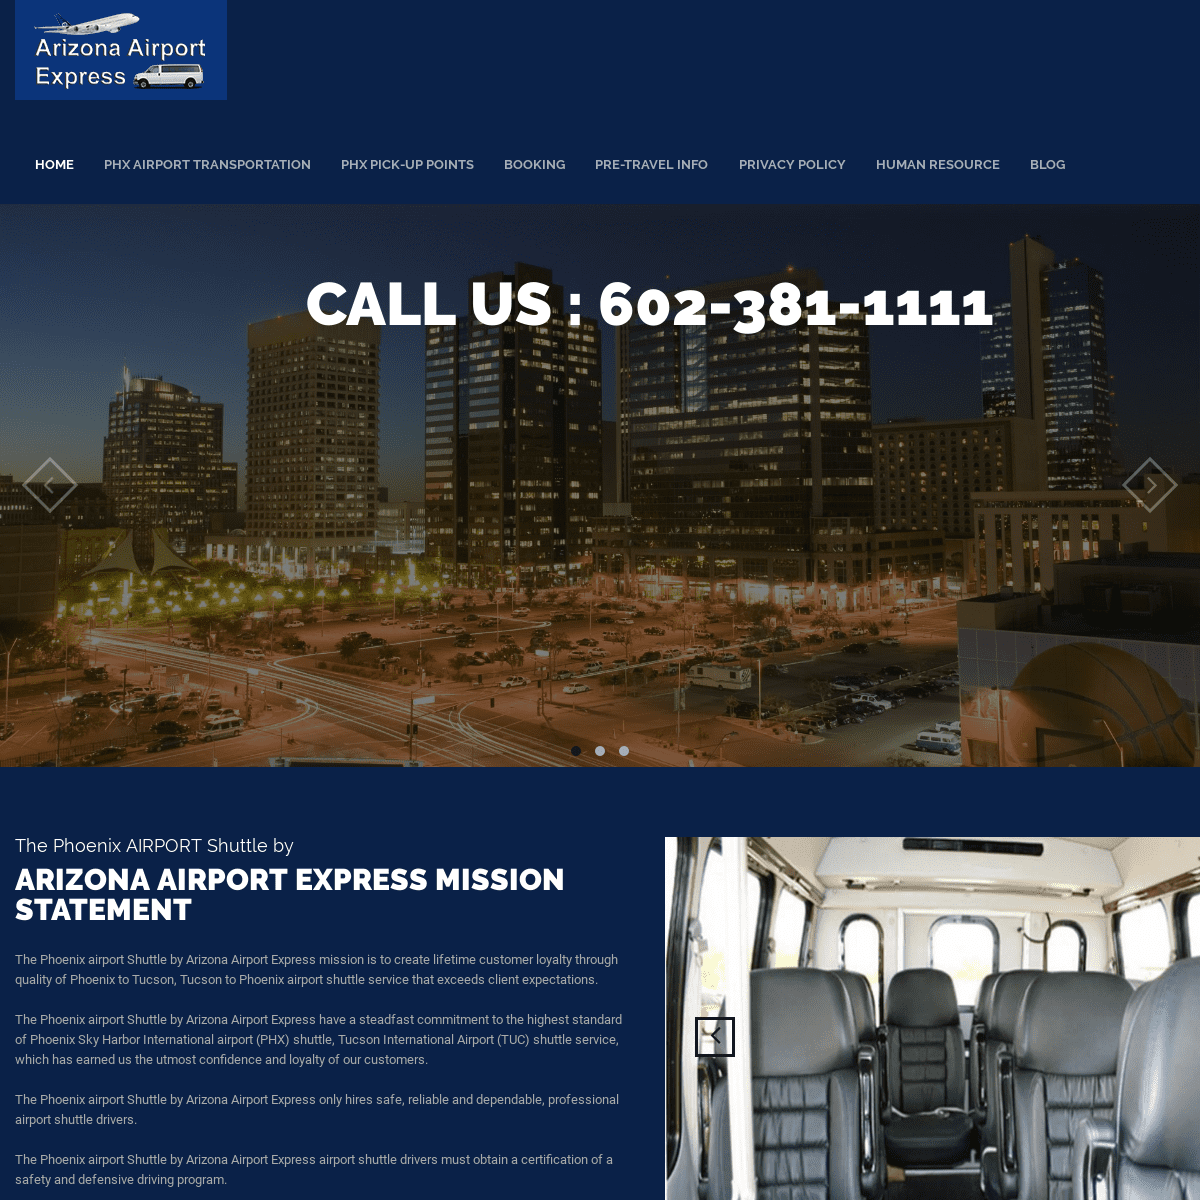 Arizona Airport Shuttle | Shuttle service to Phoenix airport | Phoenix airport shuttle